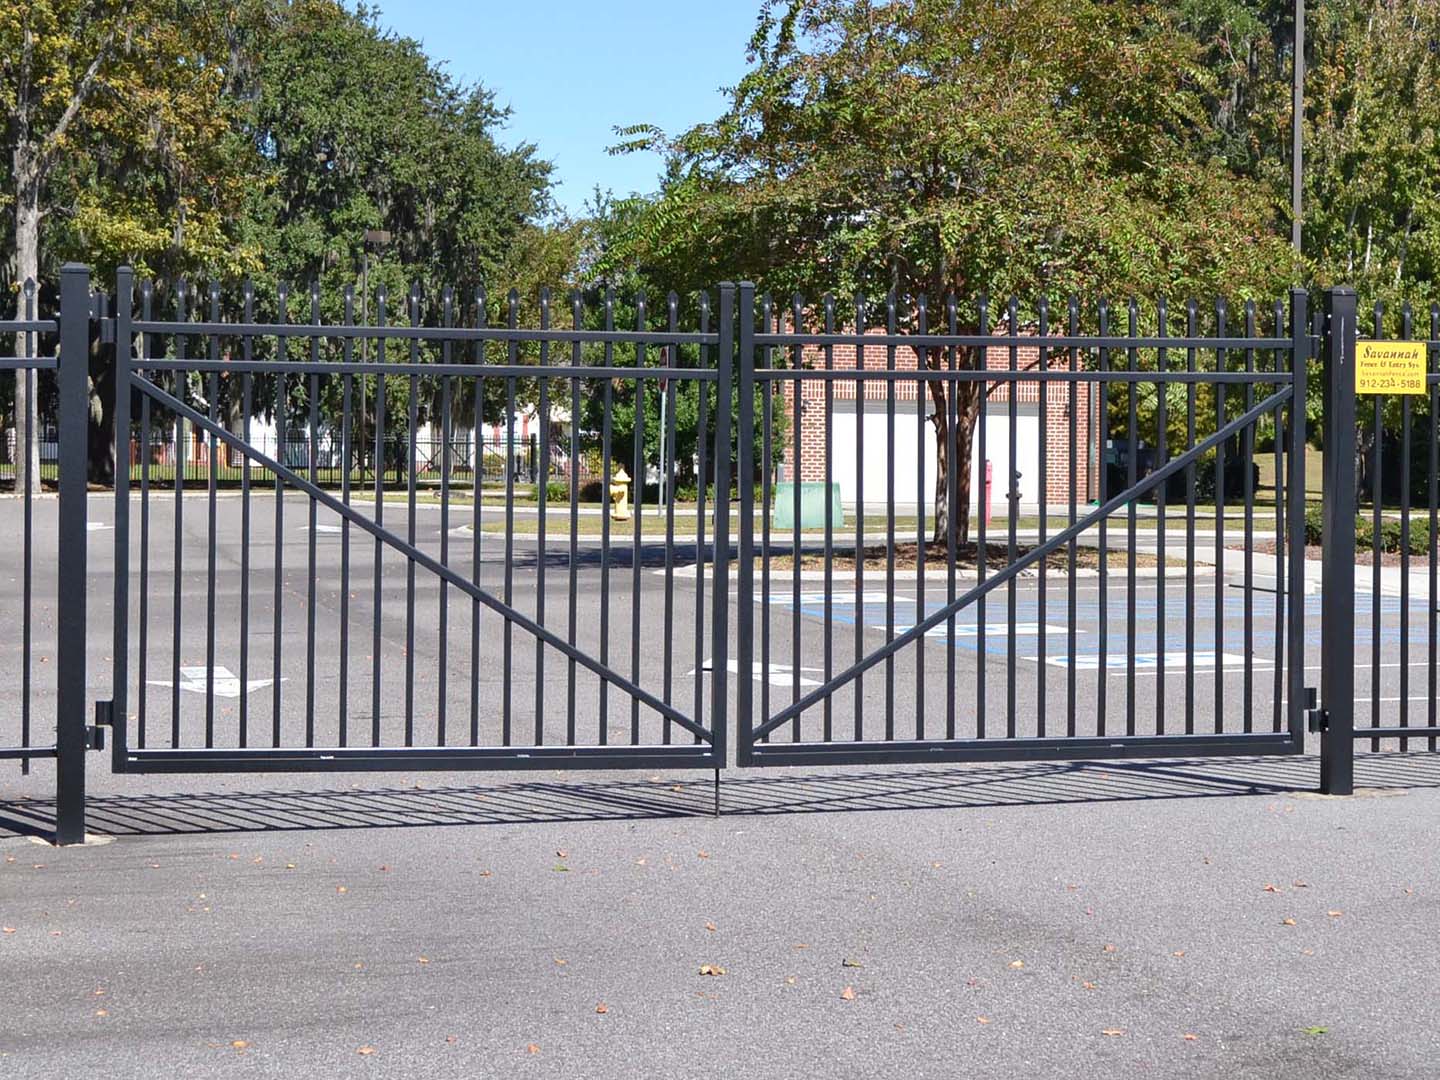 Photo of a Savannah, GA commercial gate